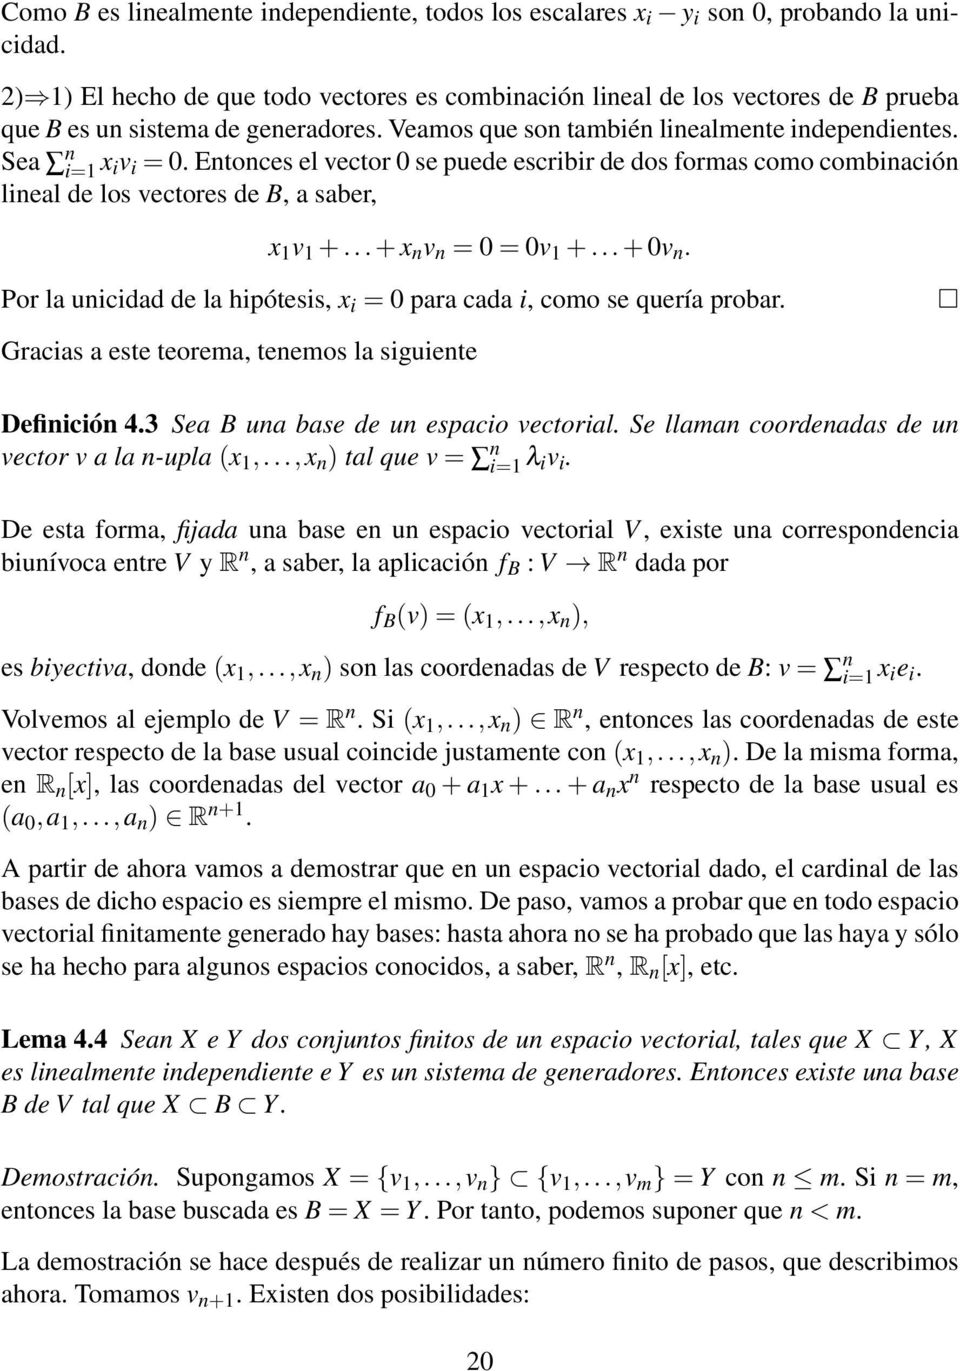 Etoces el vector 0 se puede escribir de dos formas como combiació lieal de los vectores de B, a saber, x 1 v 1 +... + x v = 0 = 0v 1 +... + 0v.